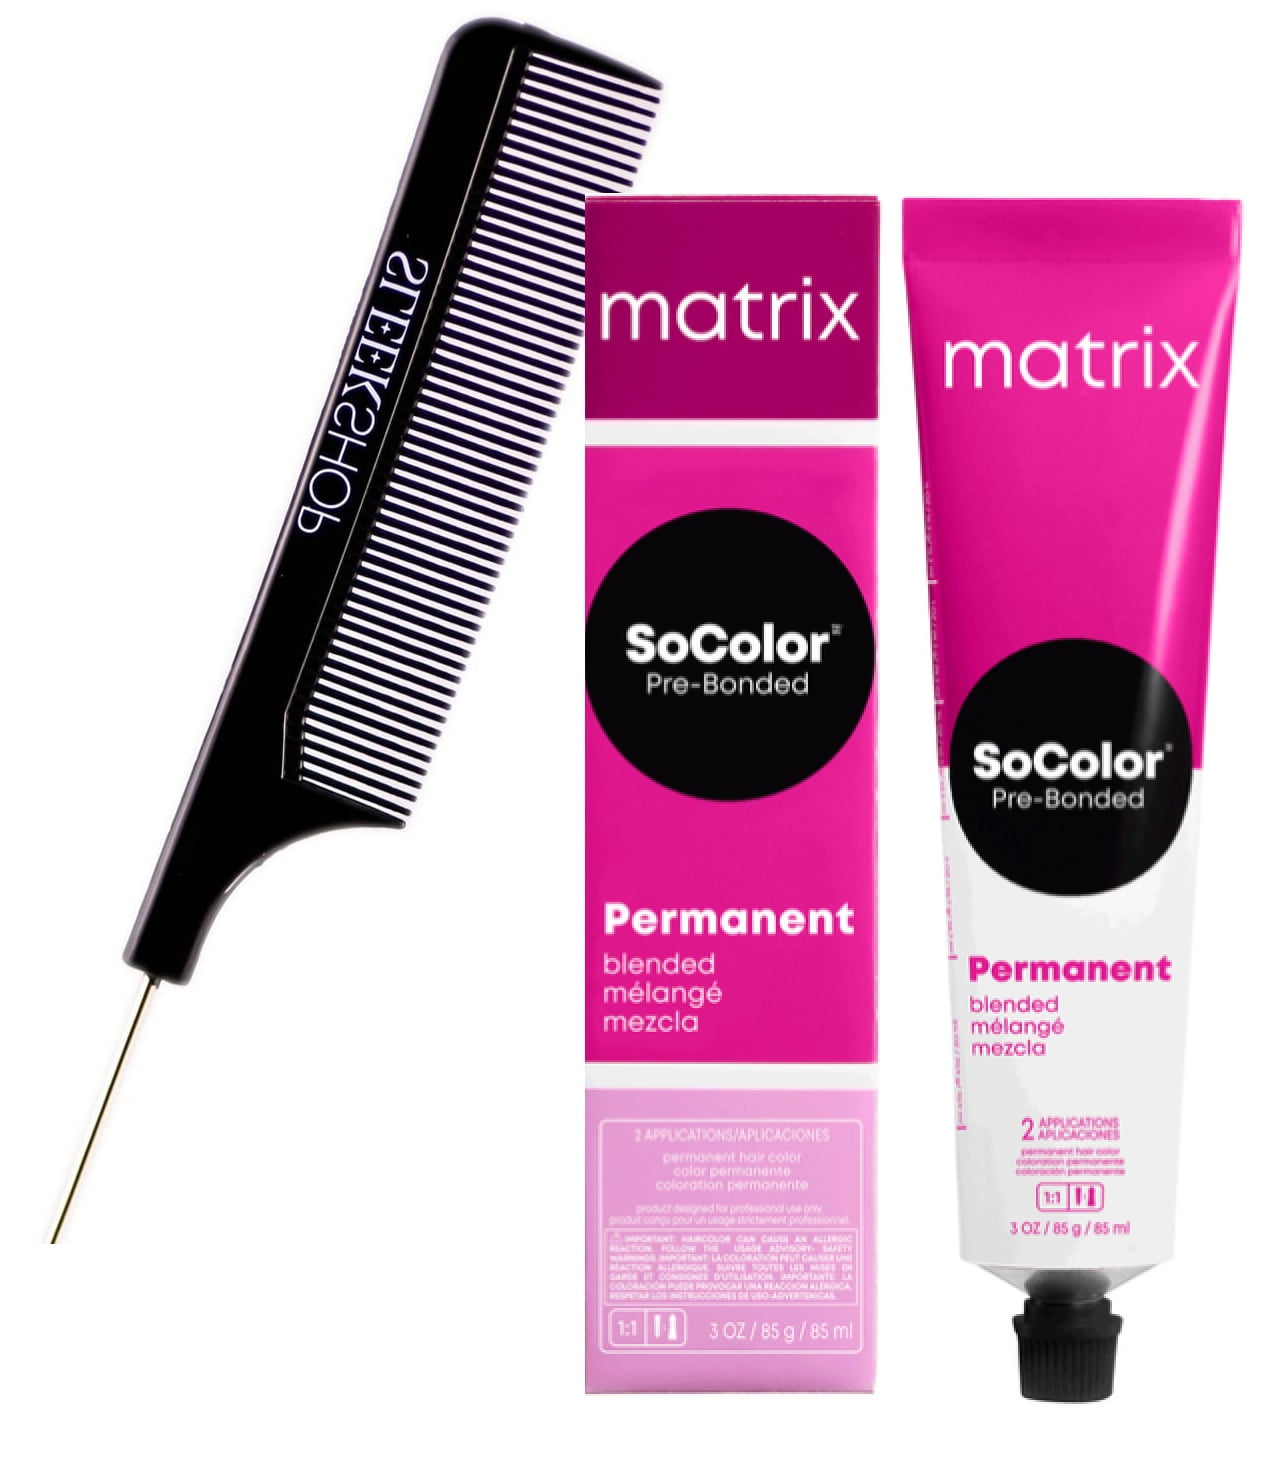 1N - Black Neutral , Matrix So Color Pre-Bonded Permanent Blended Hair Color,  Socolor Haircolor Dye - Pack of 1 w/ Sleek Pin Comb 